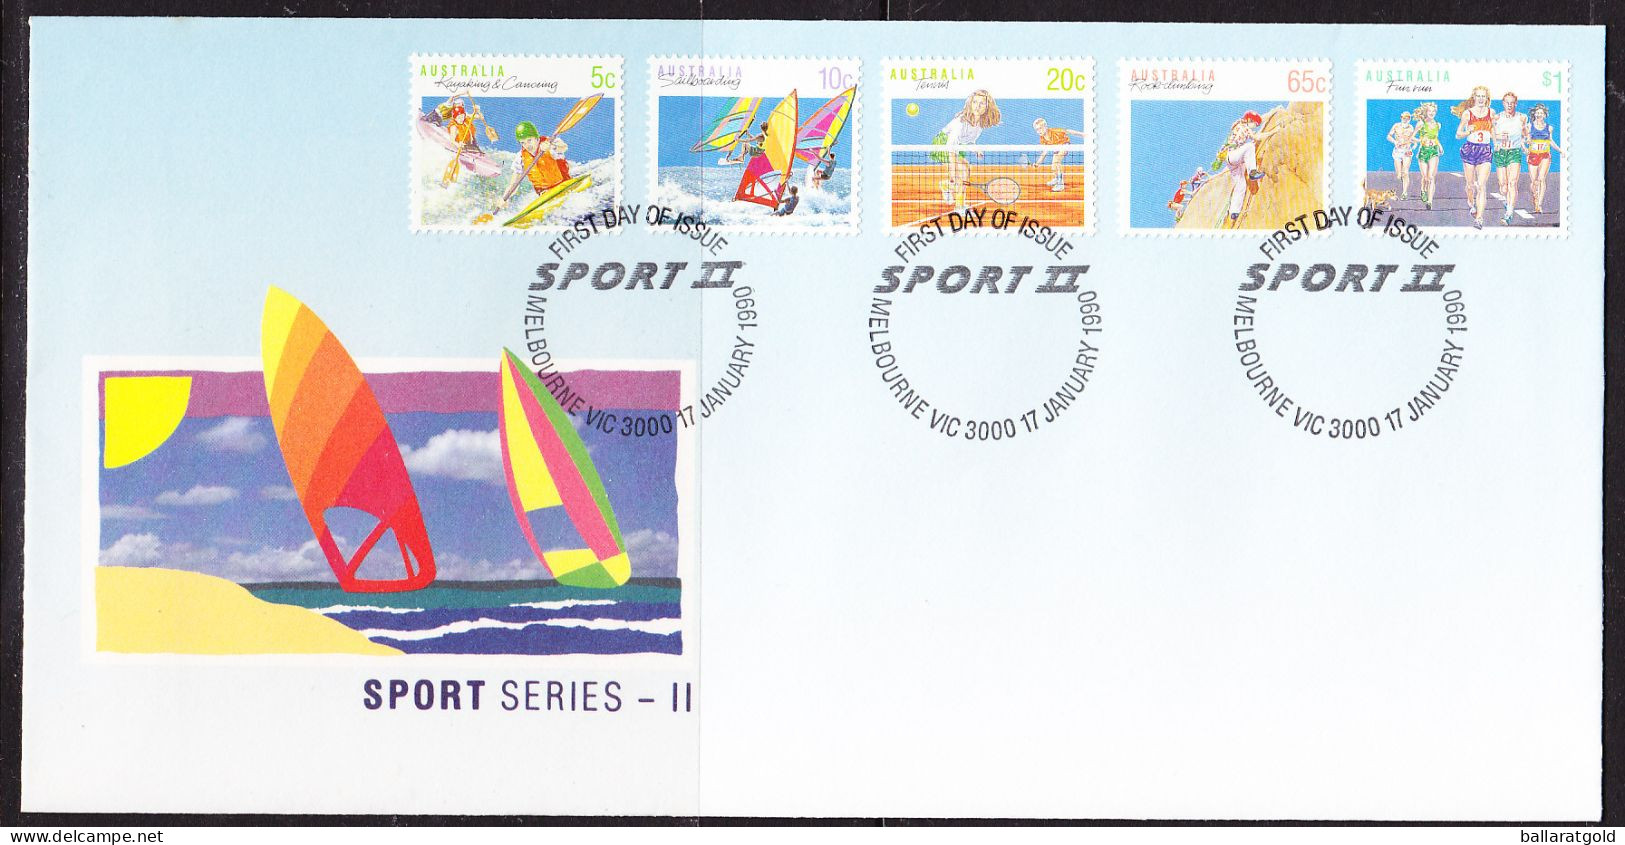 Australia 1990 Sports APM21890 First Day Cover - Briefe U. Dokumente